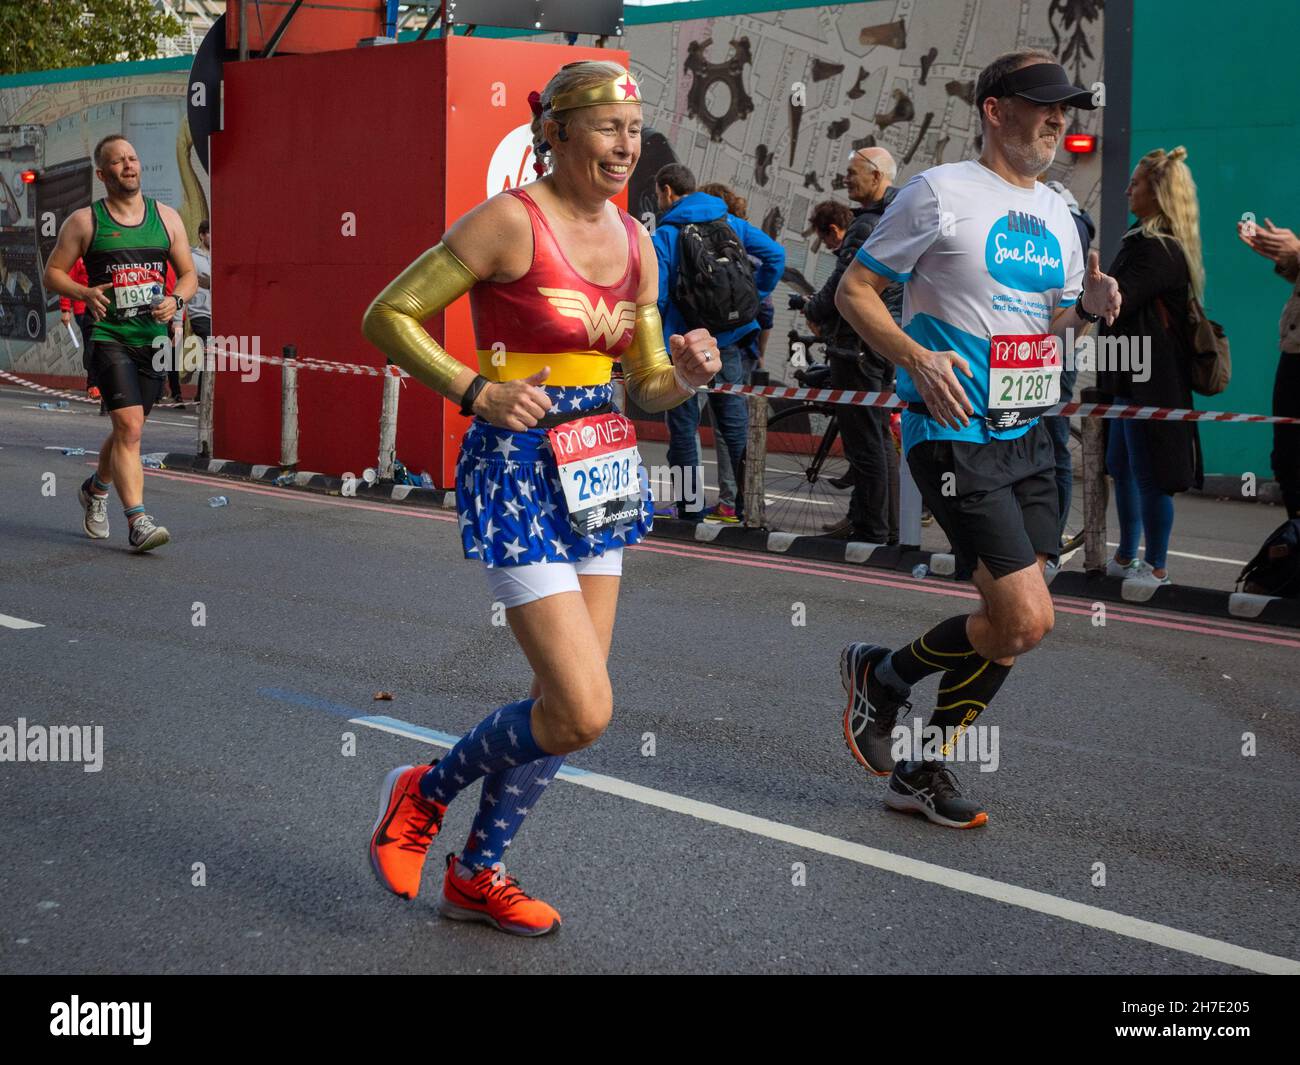 Woman running dressed as Wonder Woman, Virgin Money London Marathon 2021 at the 25 mile point, Victoria Embankment. Stock Photo